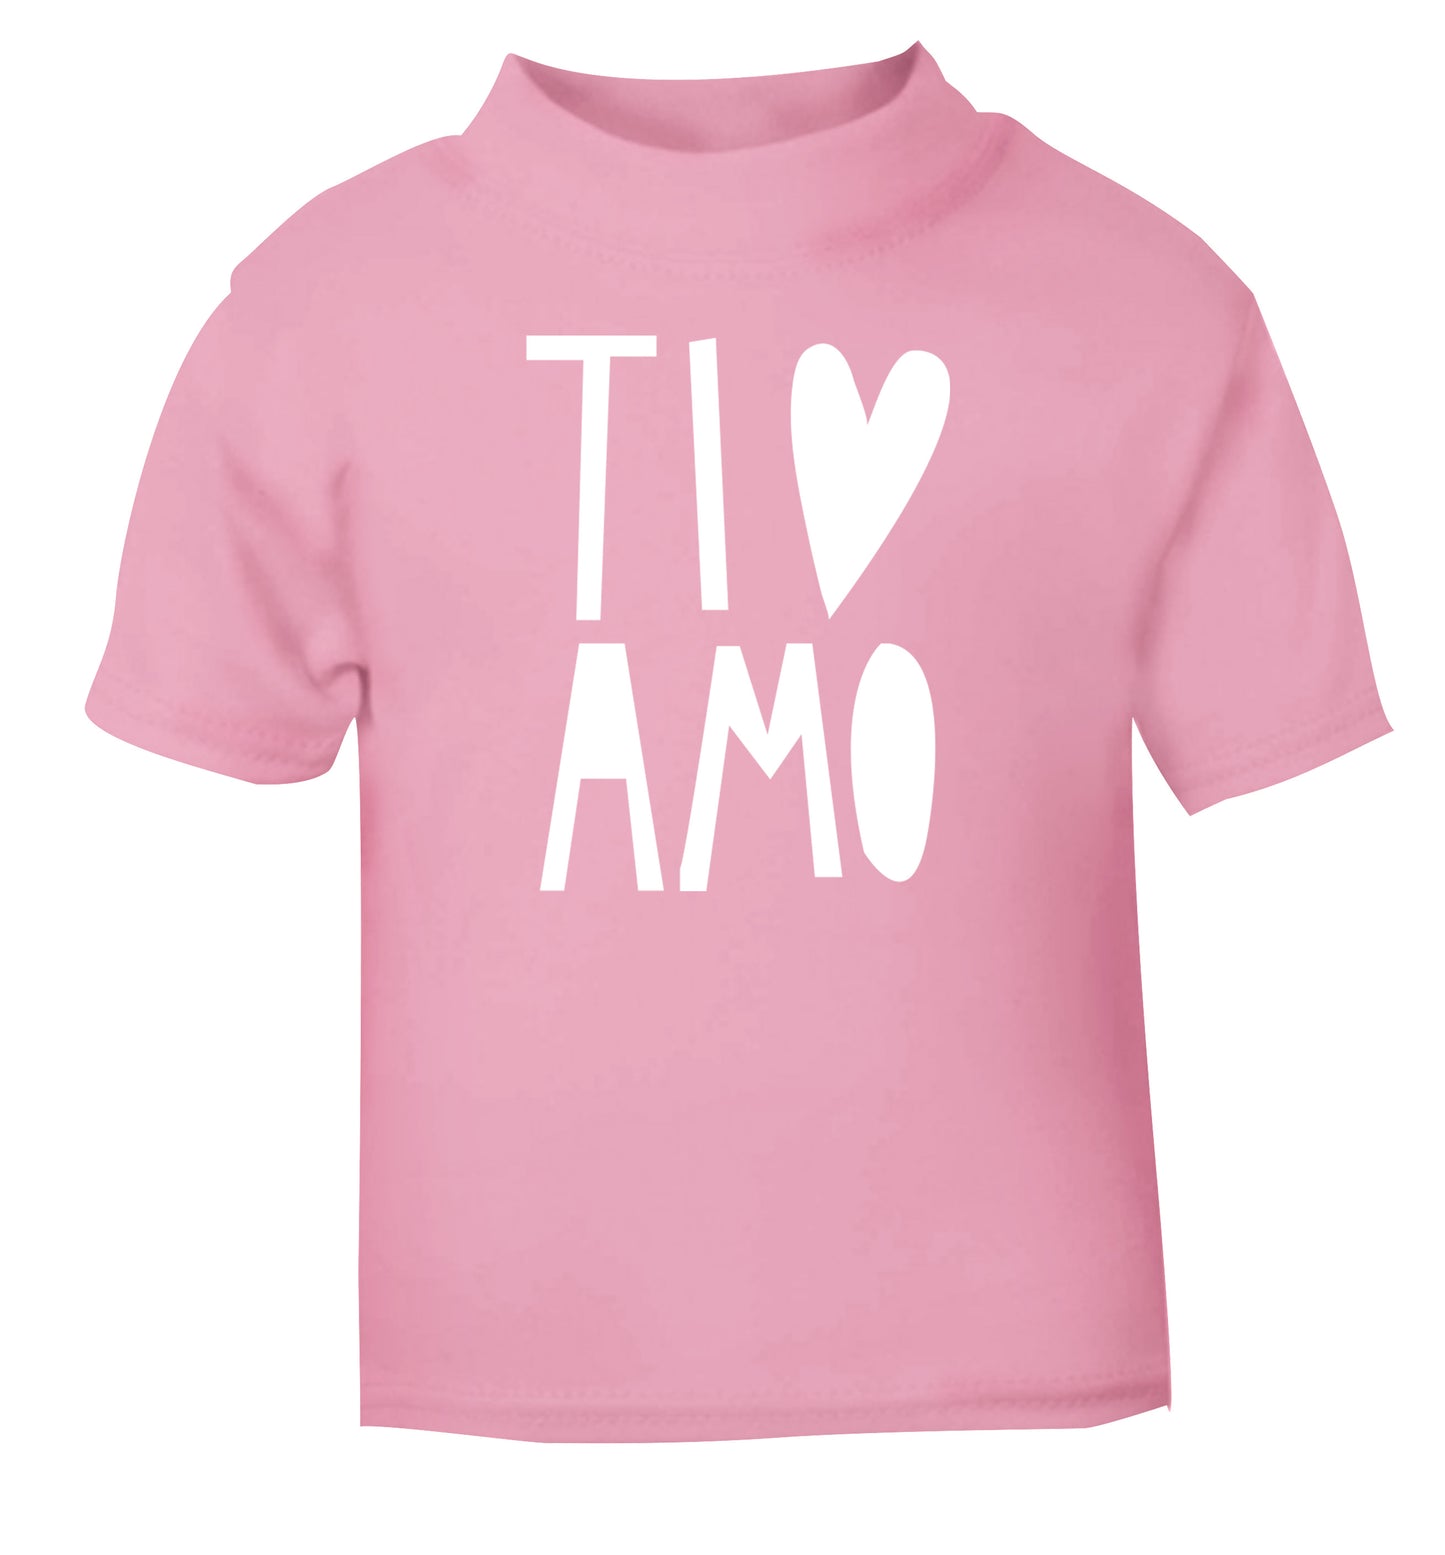 Ti amo - I love you light pink Baby Toddler Tshirt 2 Years